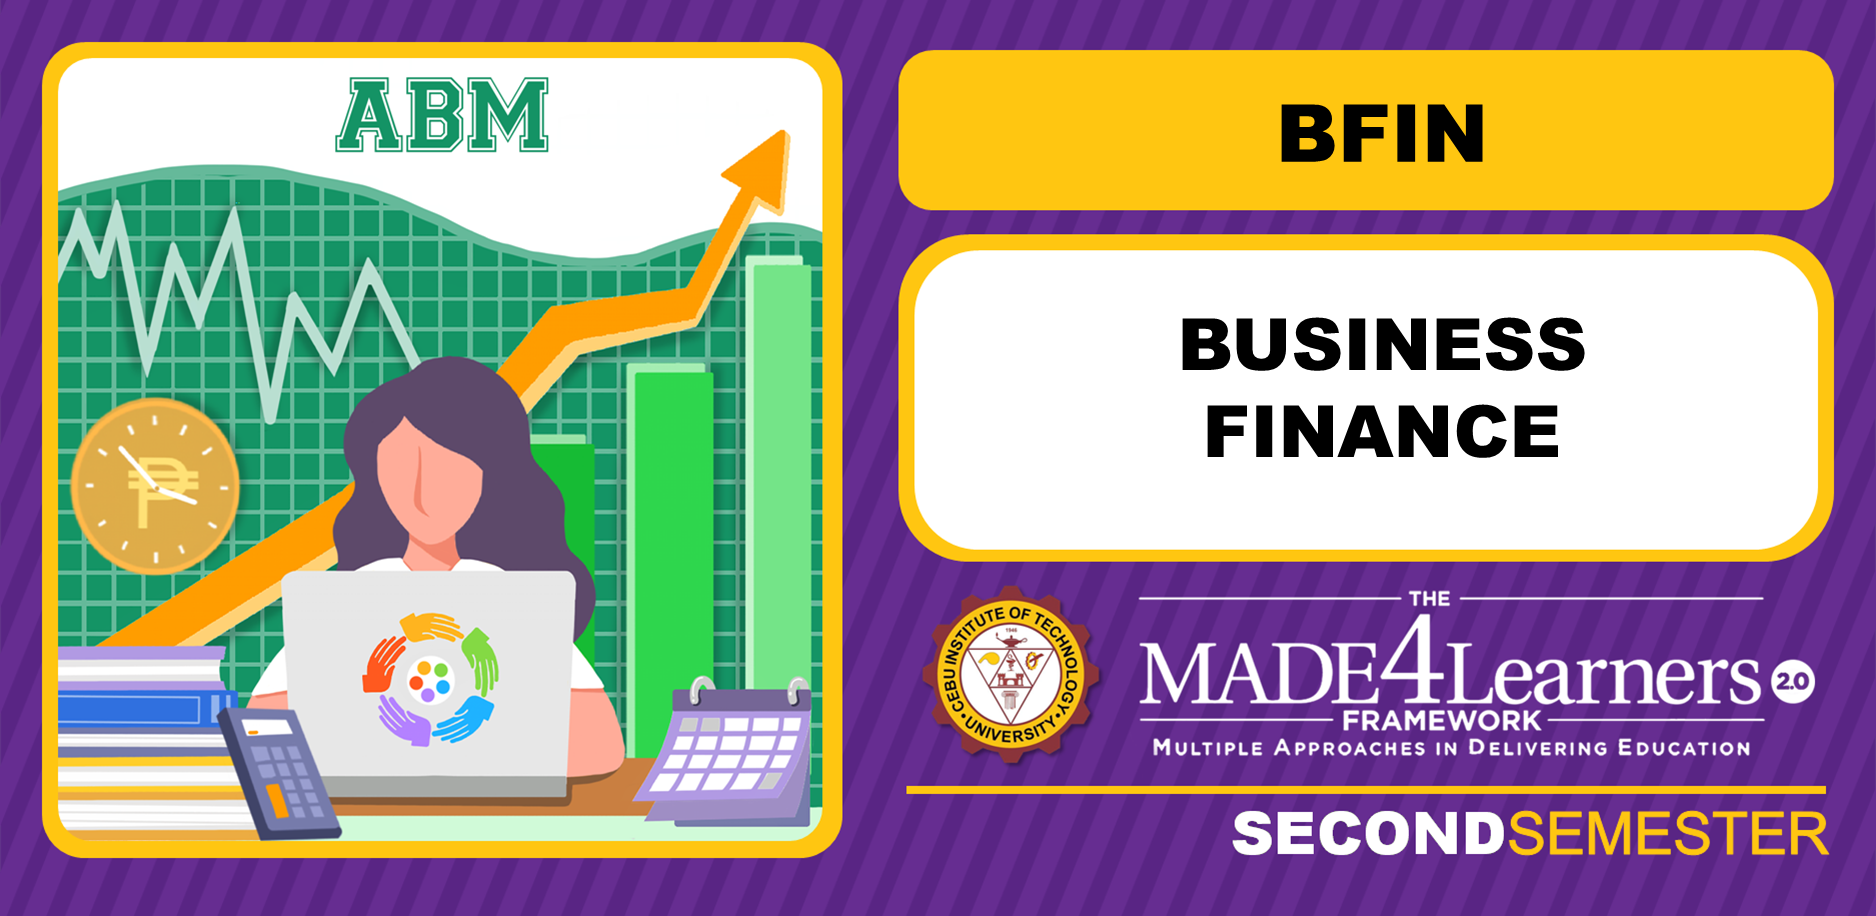 BFIN: Business Finance